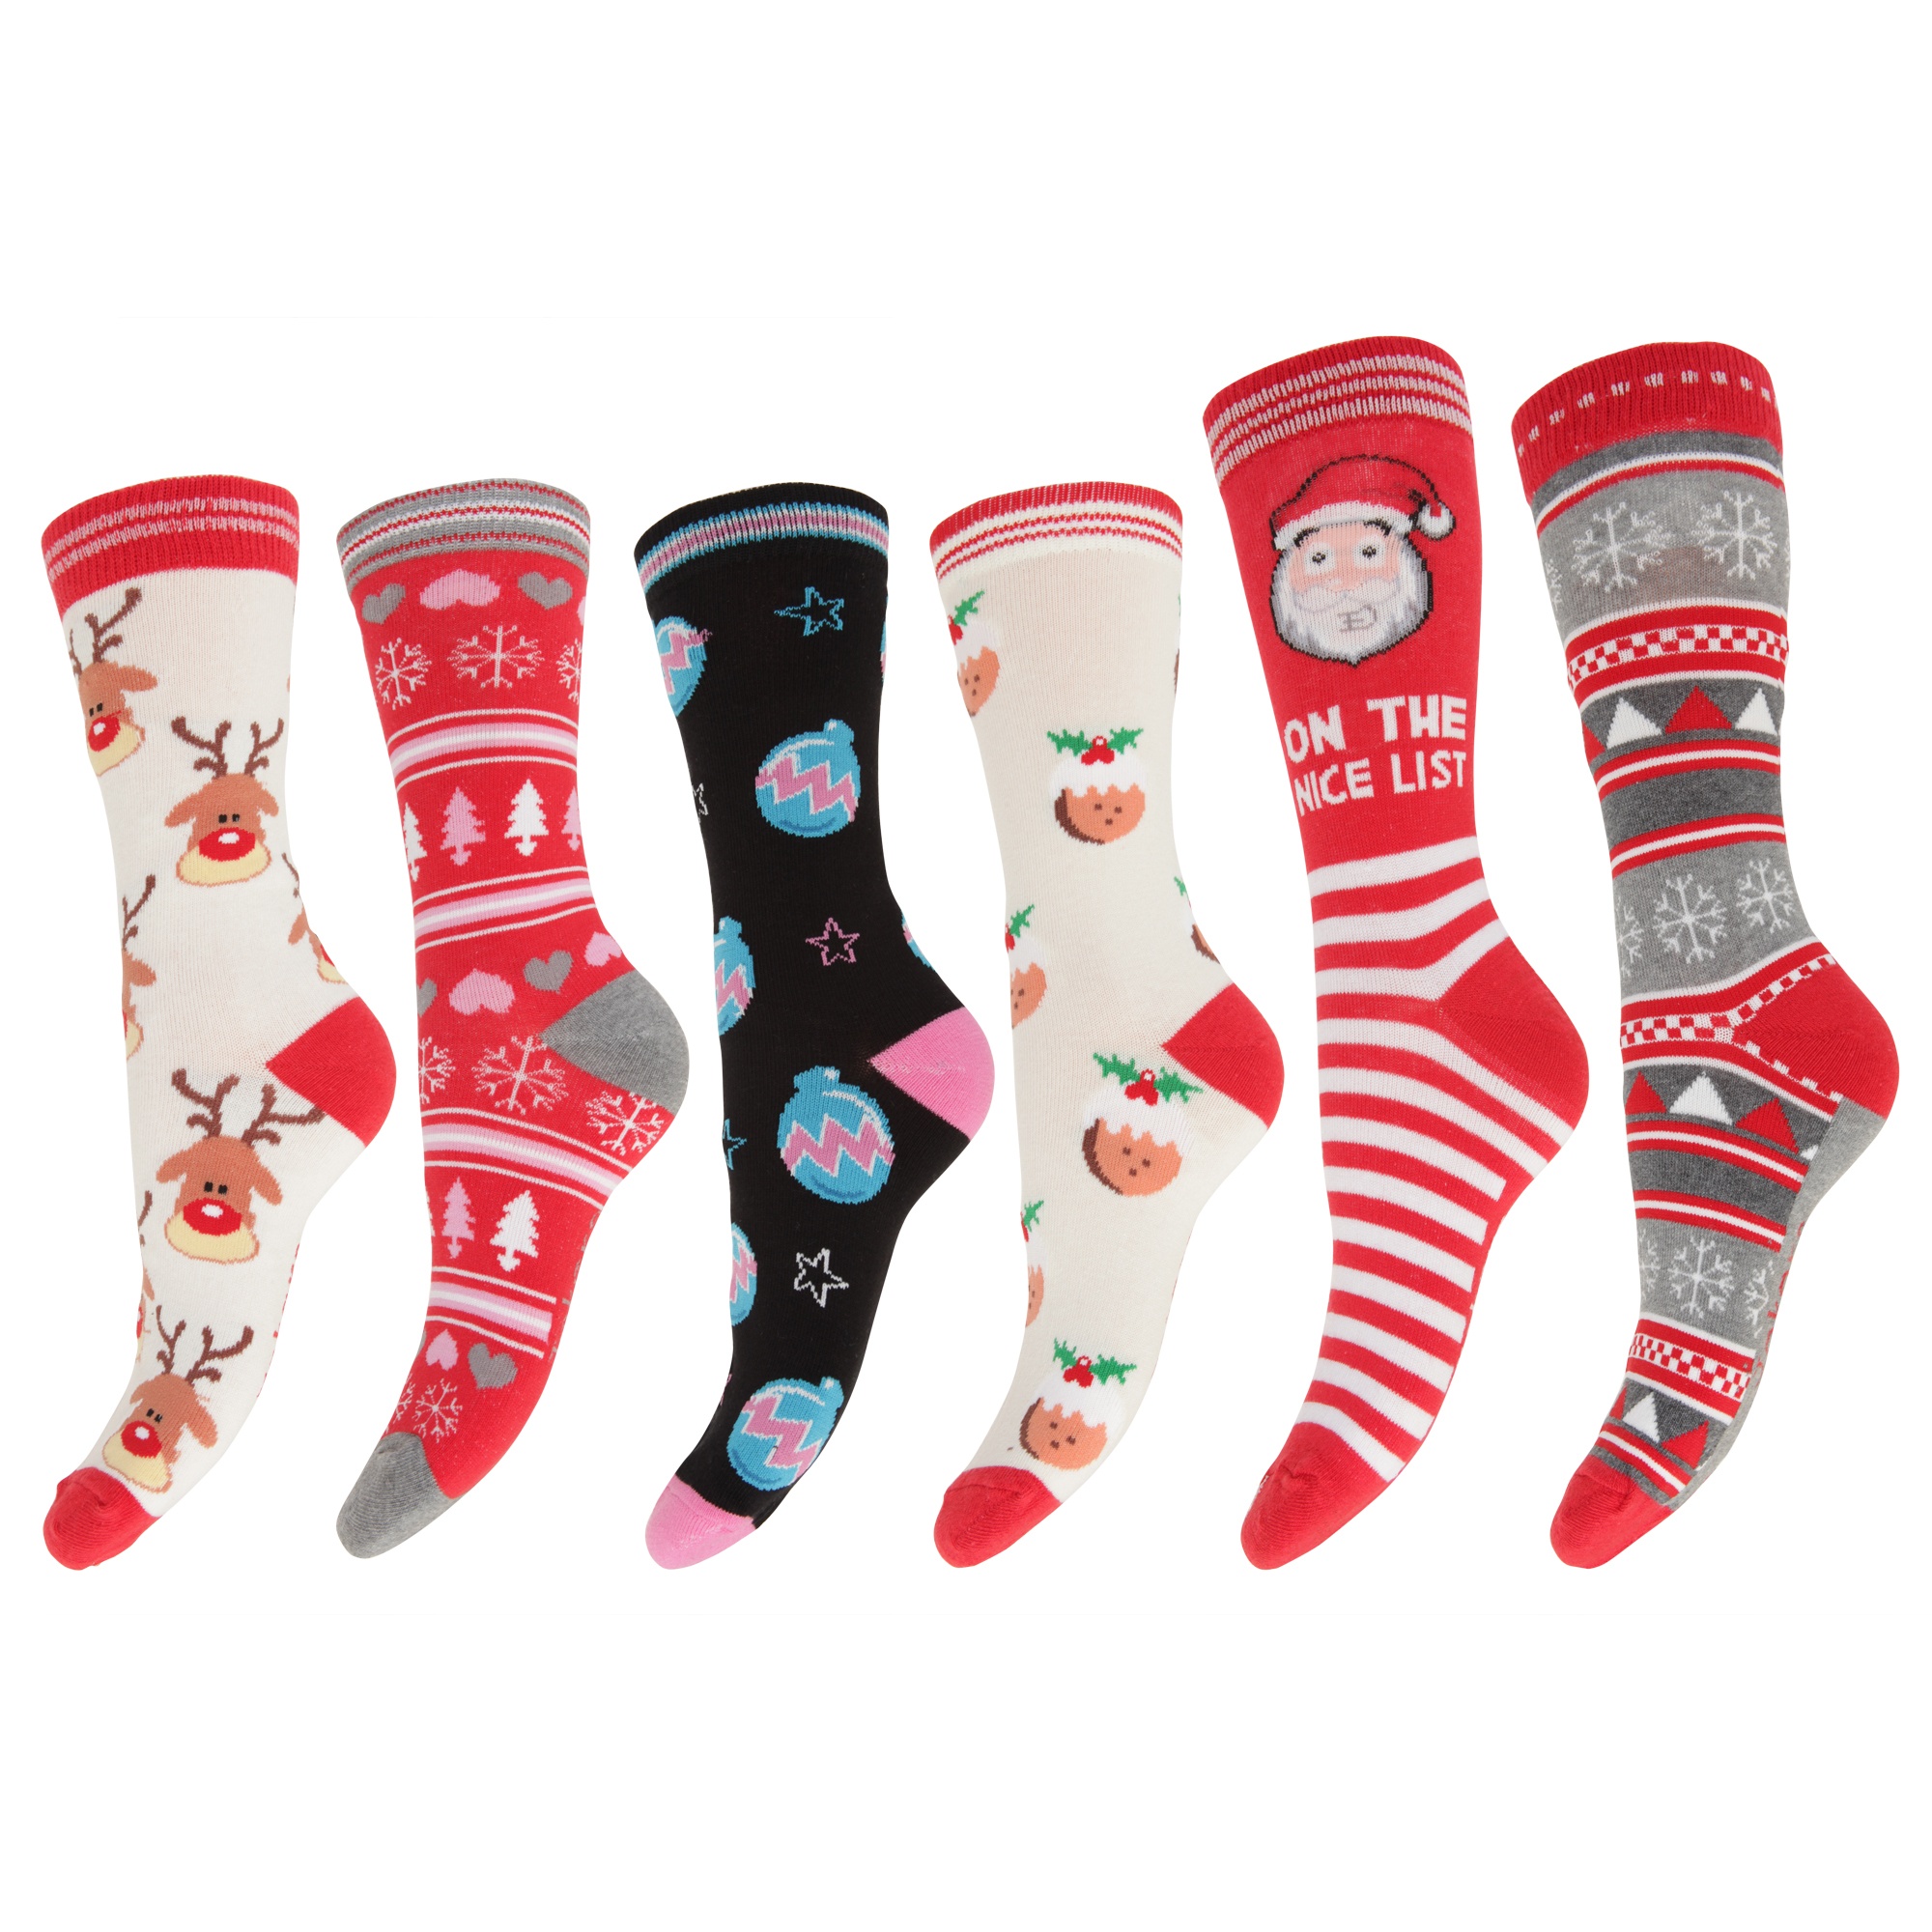 Christmas Socks Wallpapers High Quality | Download Free